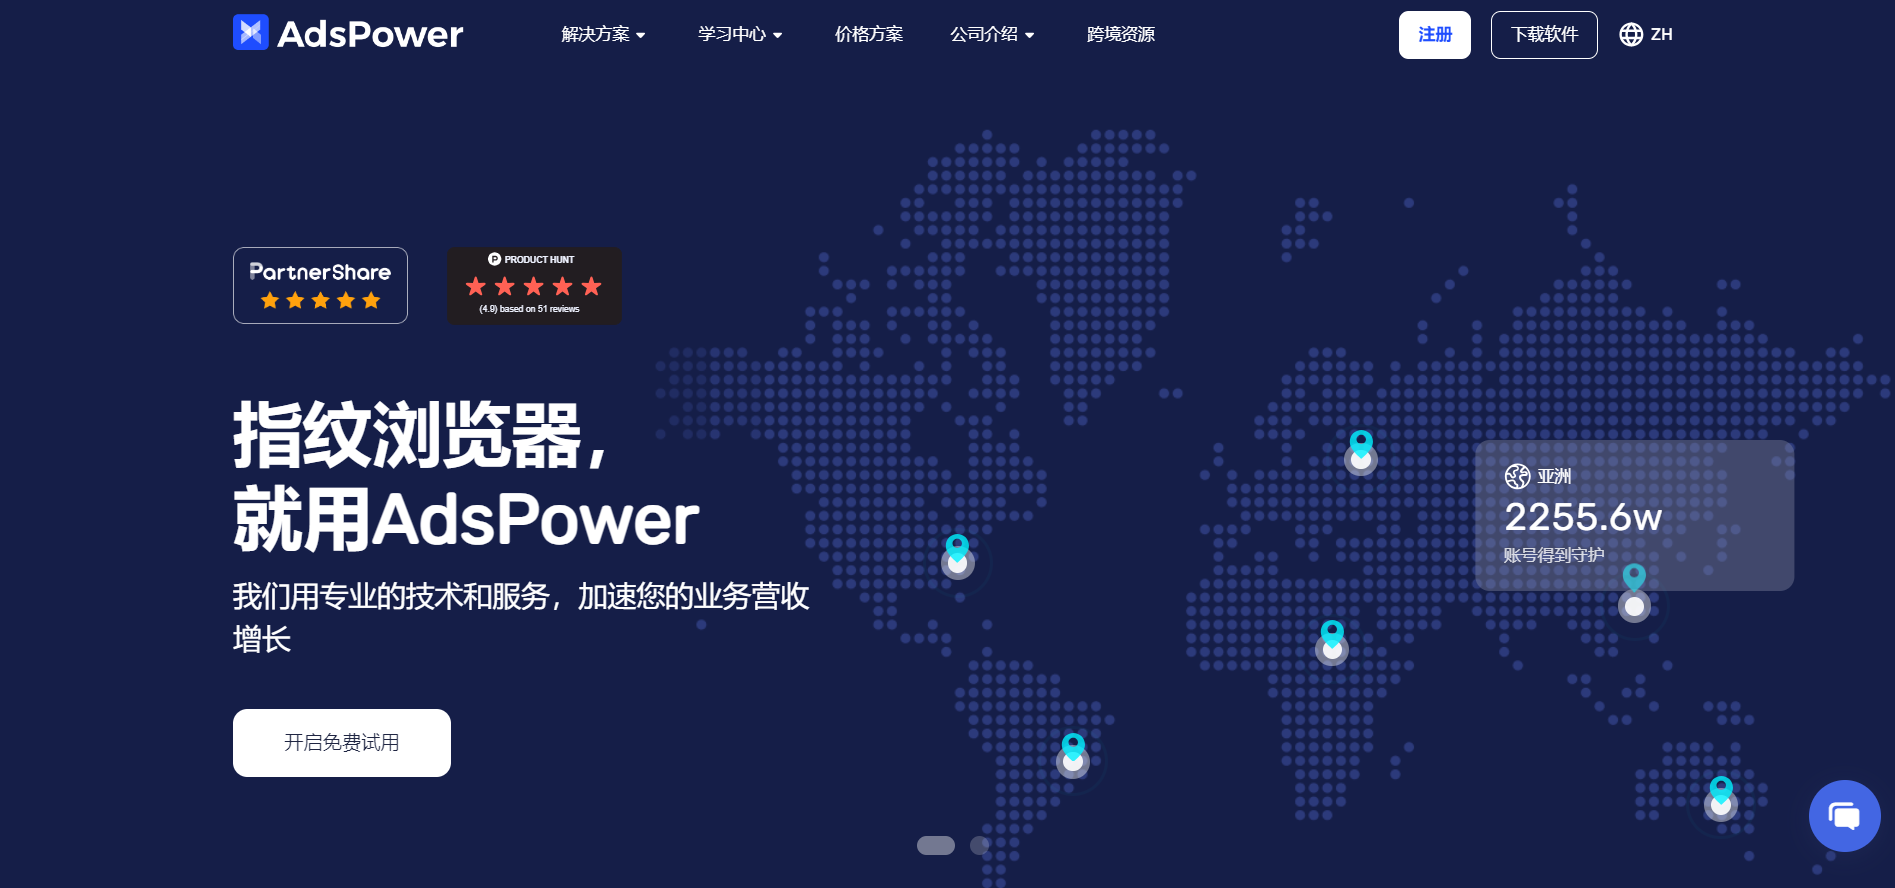 AdsPower官网界面截图